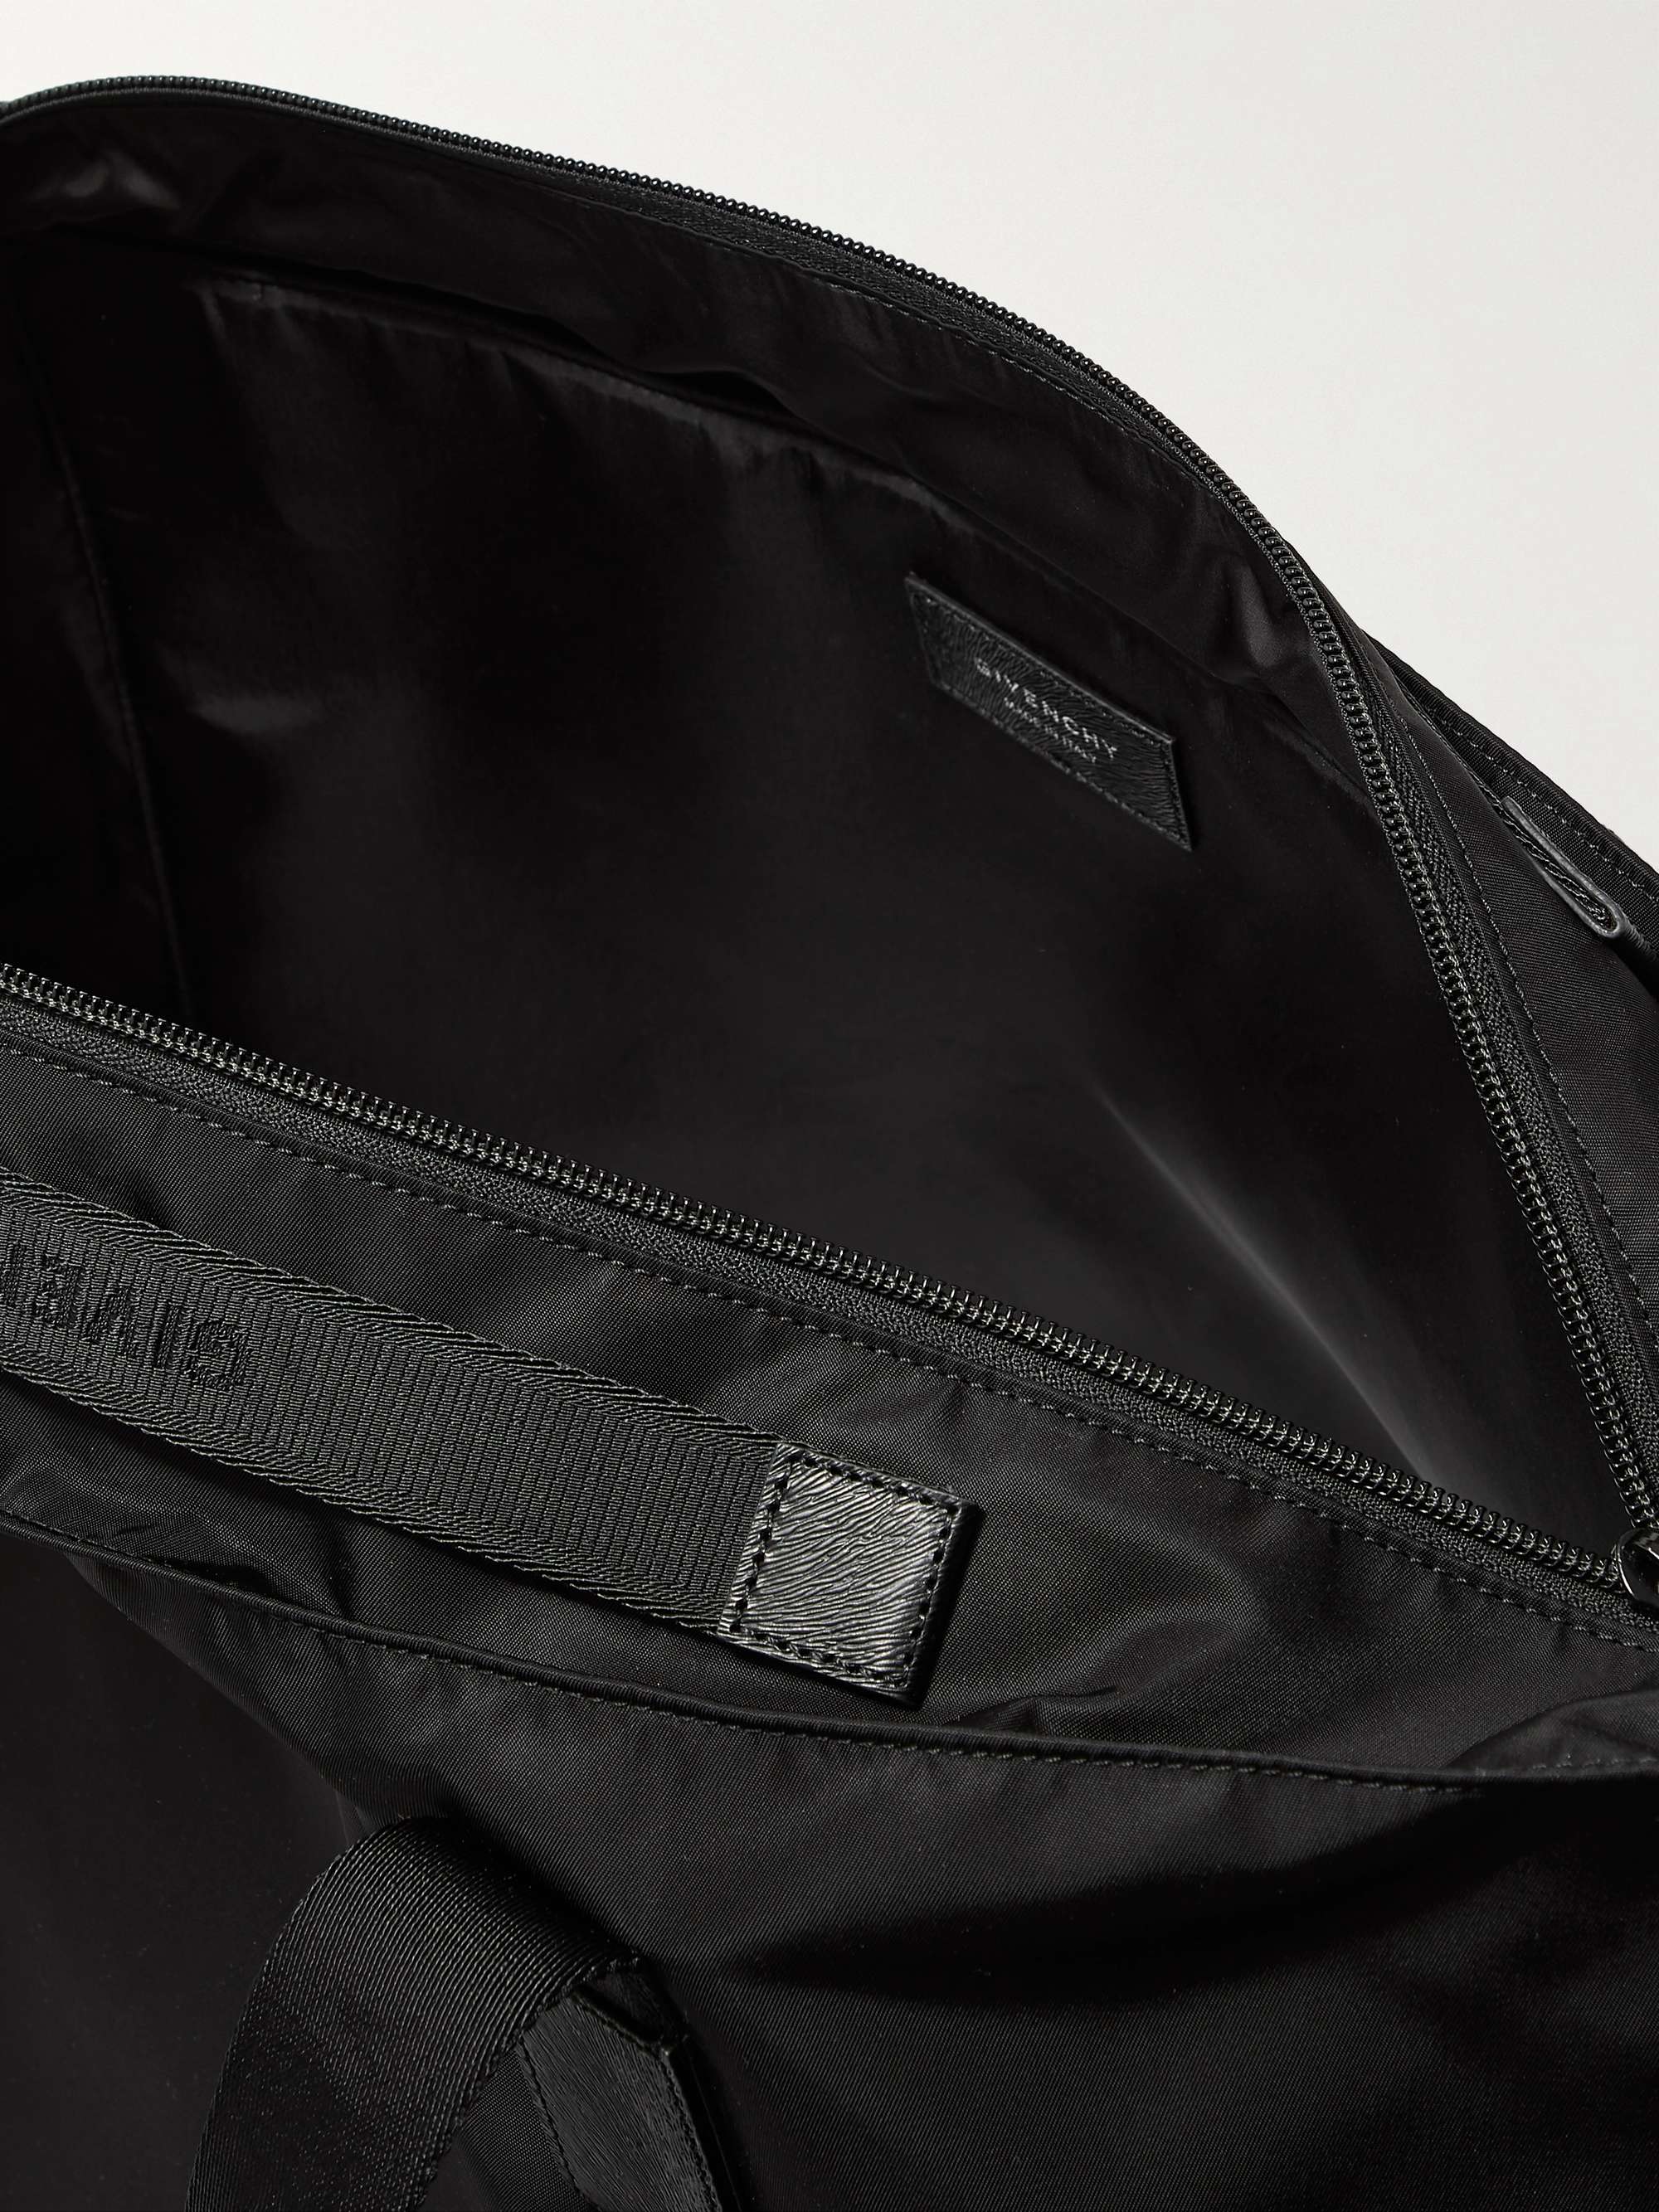 GIVENCHY Logo-Appliquéd Leather-Trimmed Nylon Tote Bag